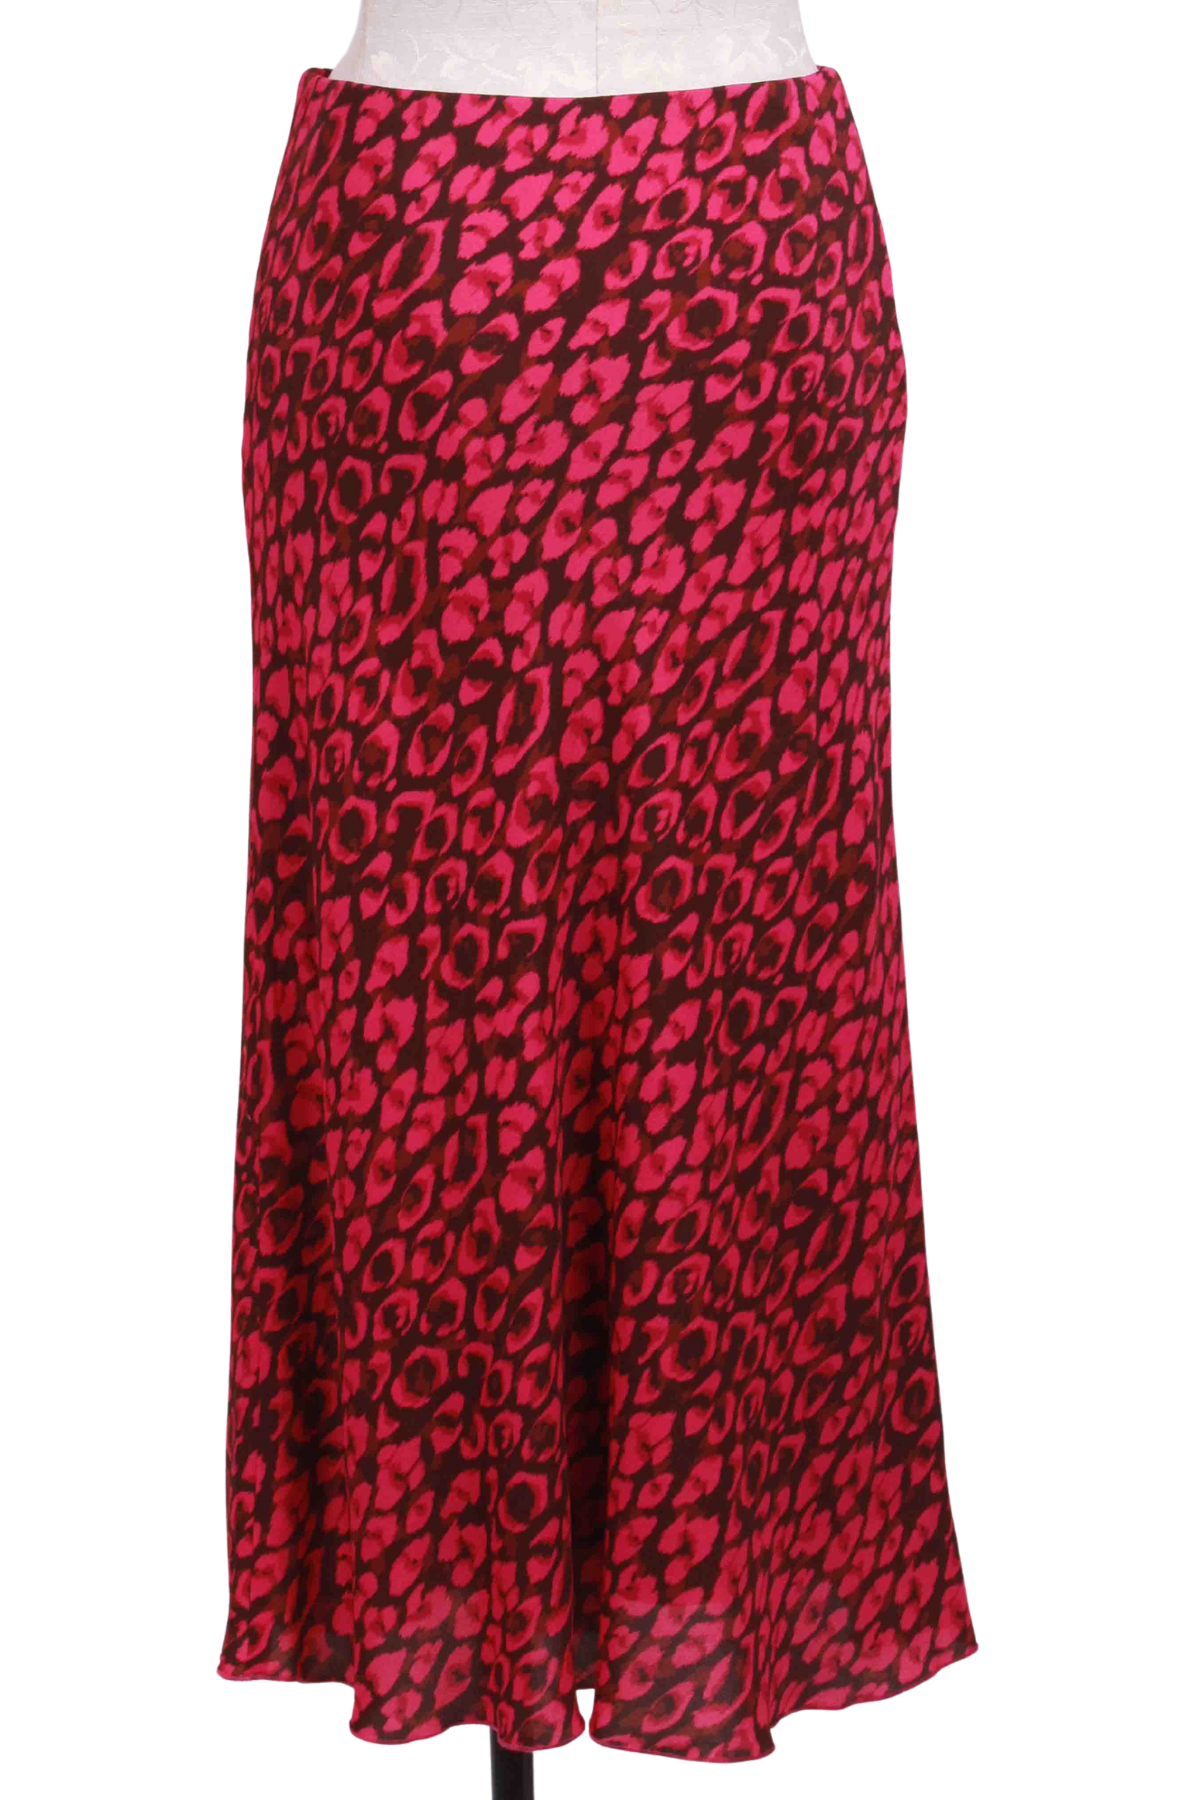 back view of Pink Leopard Print Bias Cut Midi Skirt by Fifteen Twenty